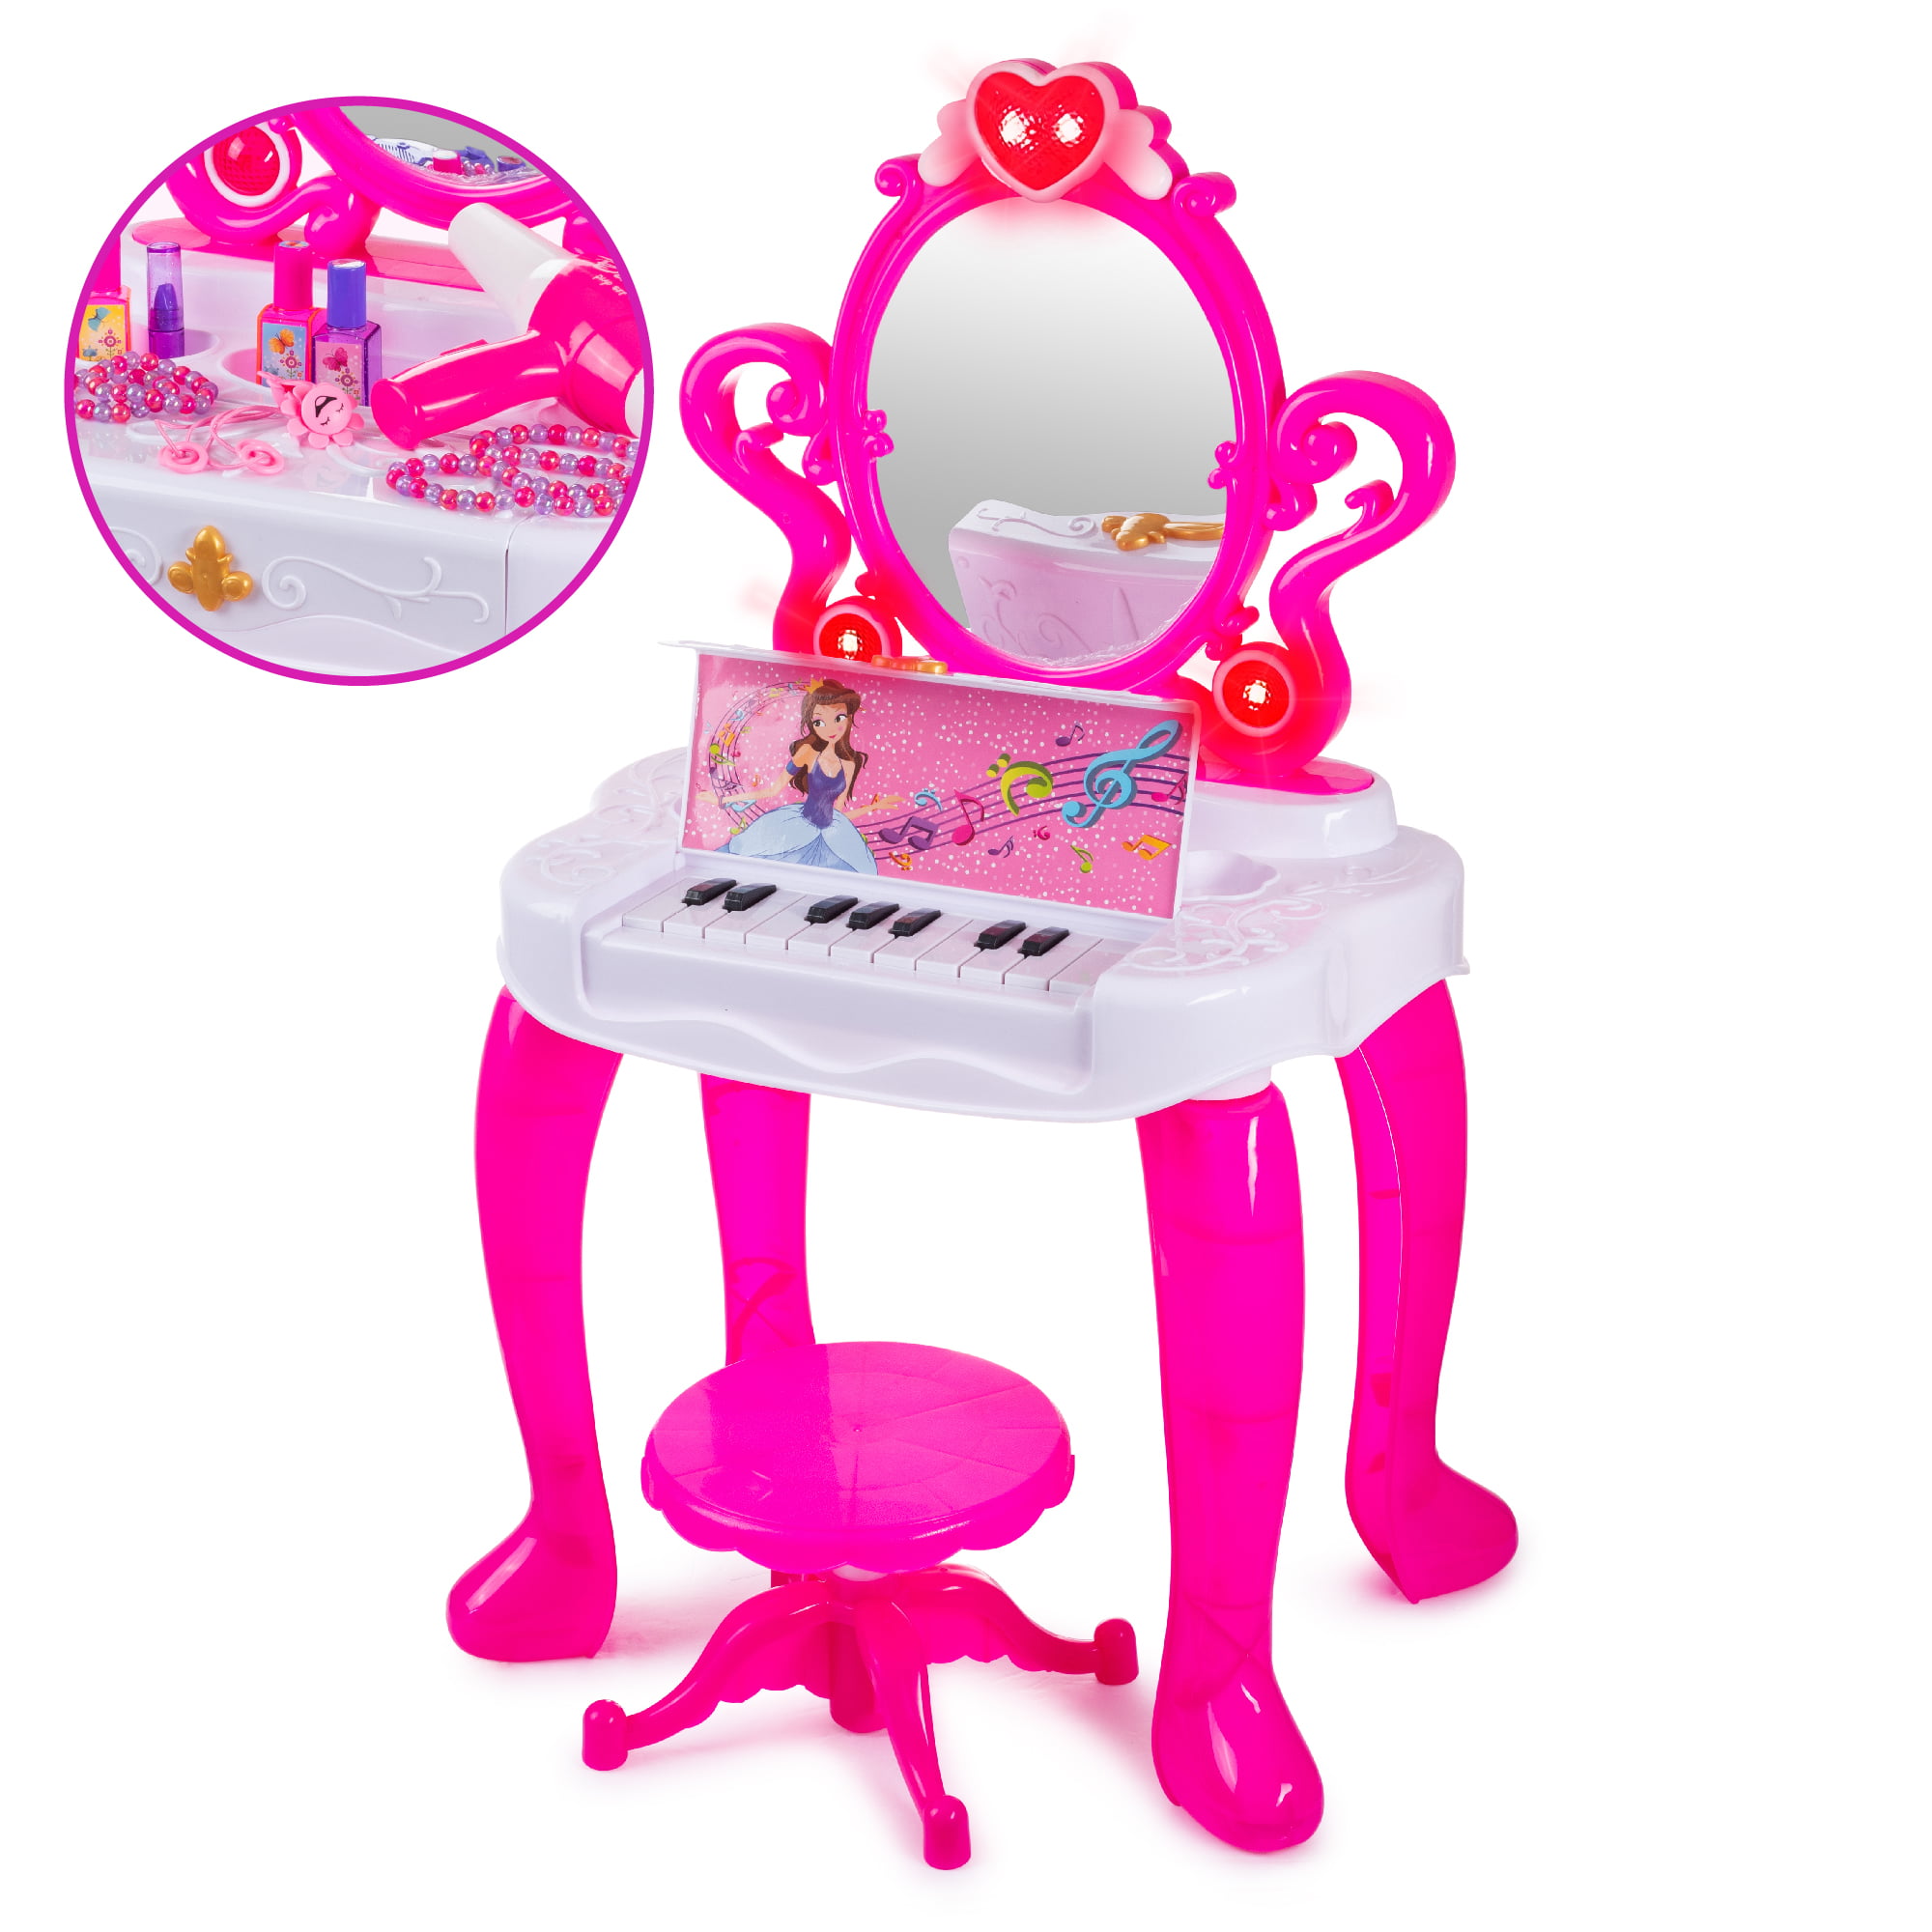 girlstablechair mirror accessories kids toy kids make up table Vanity Set Toy 